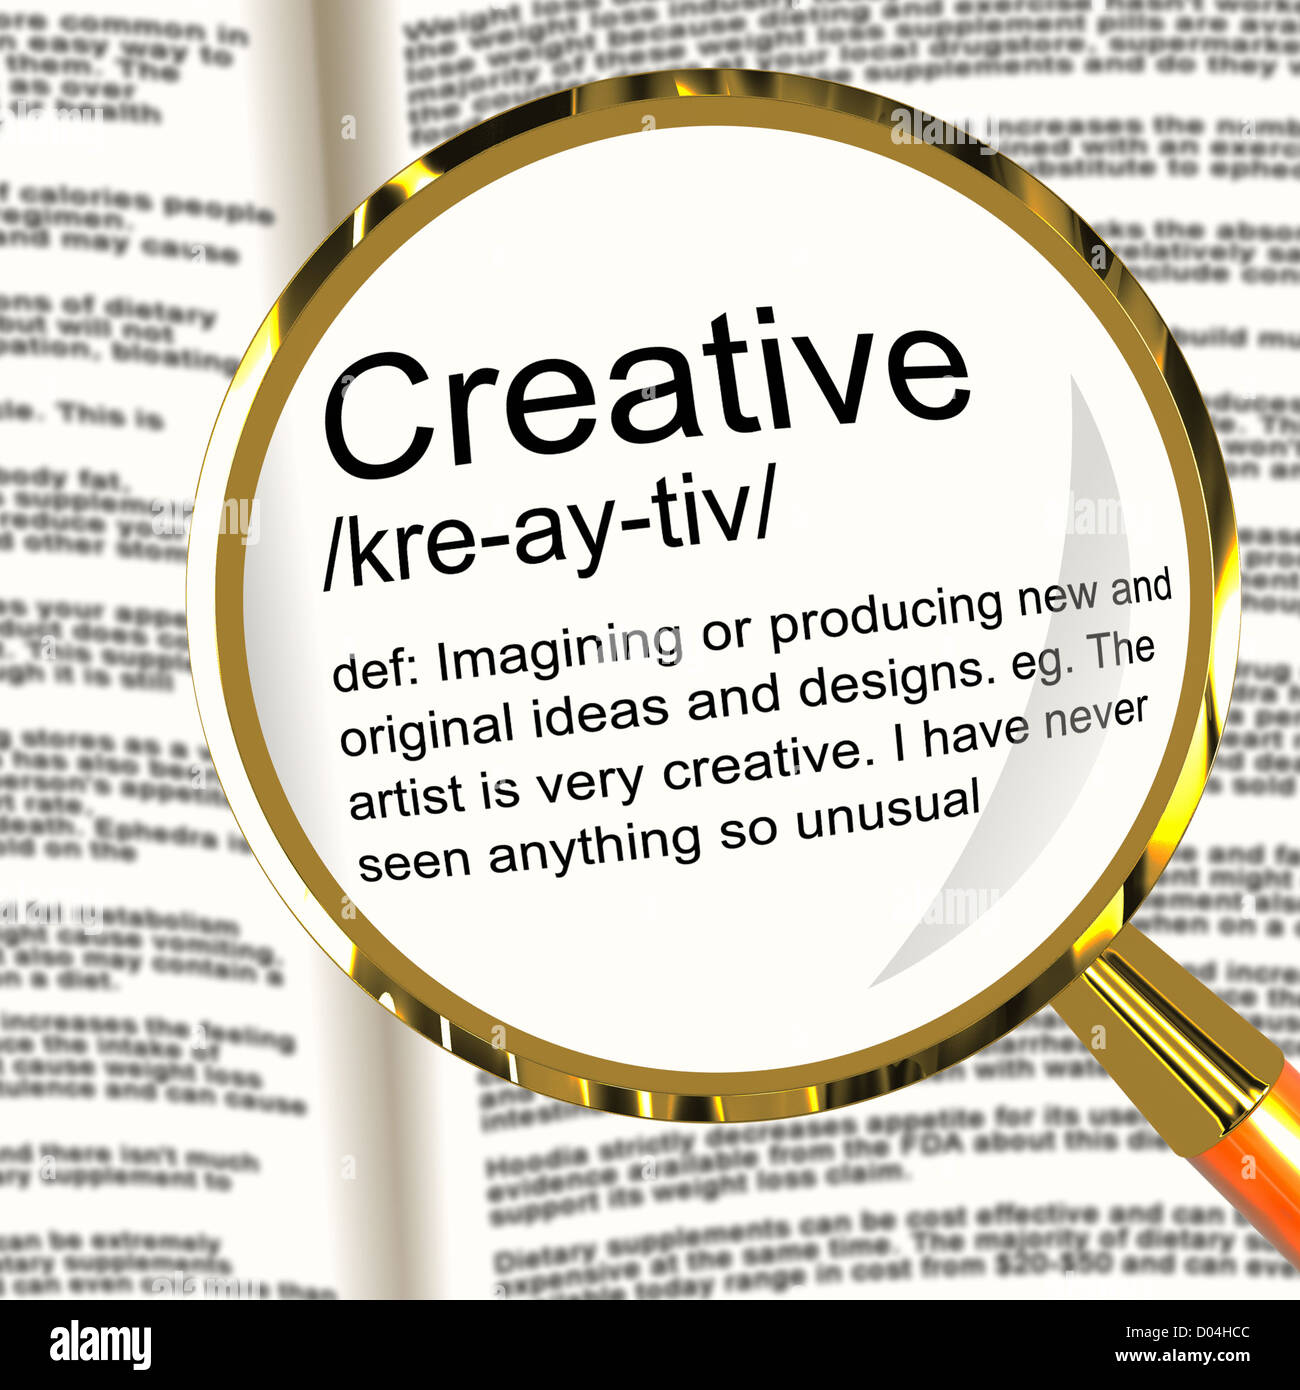 Creative Definition Magnifier Shows Original Ideas Or Artistic Designs Stock Photo